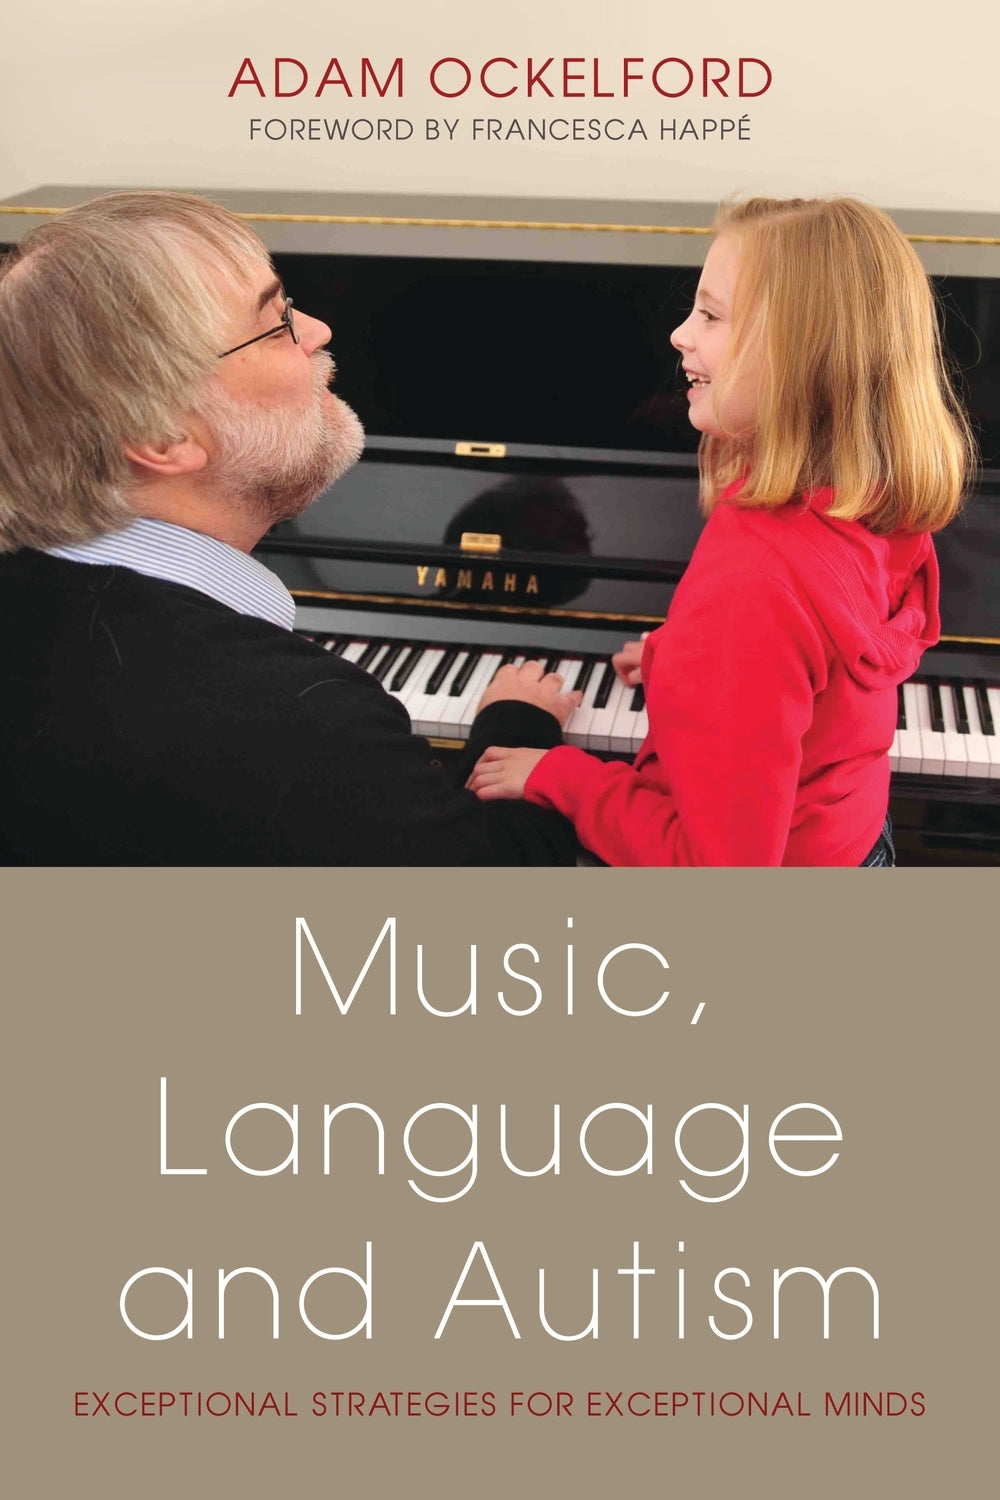 Music, Language and Autism by Francesca Happé, Adam Ockelford